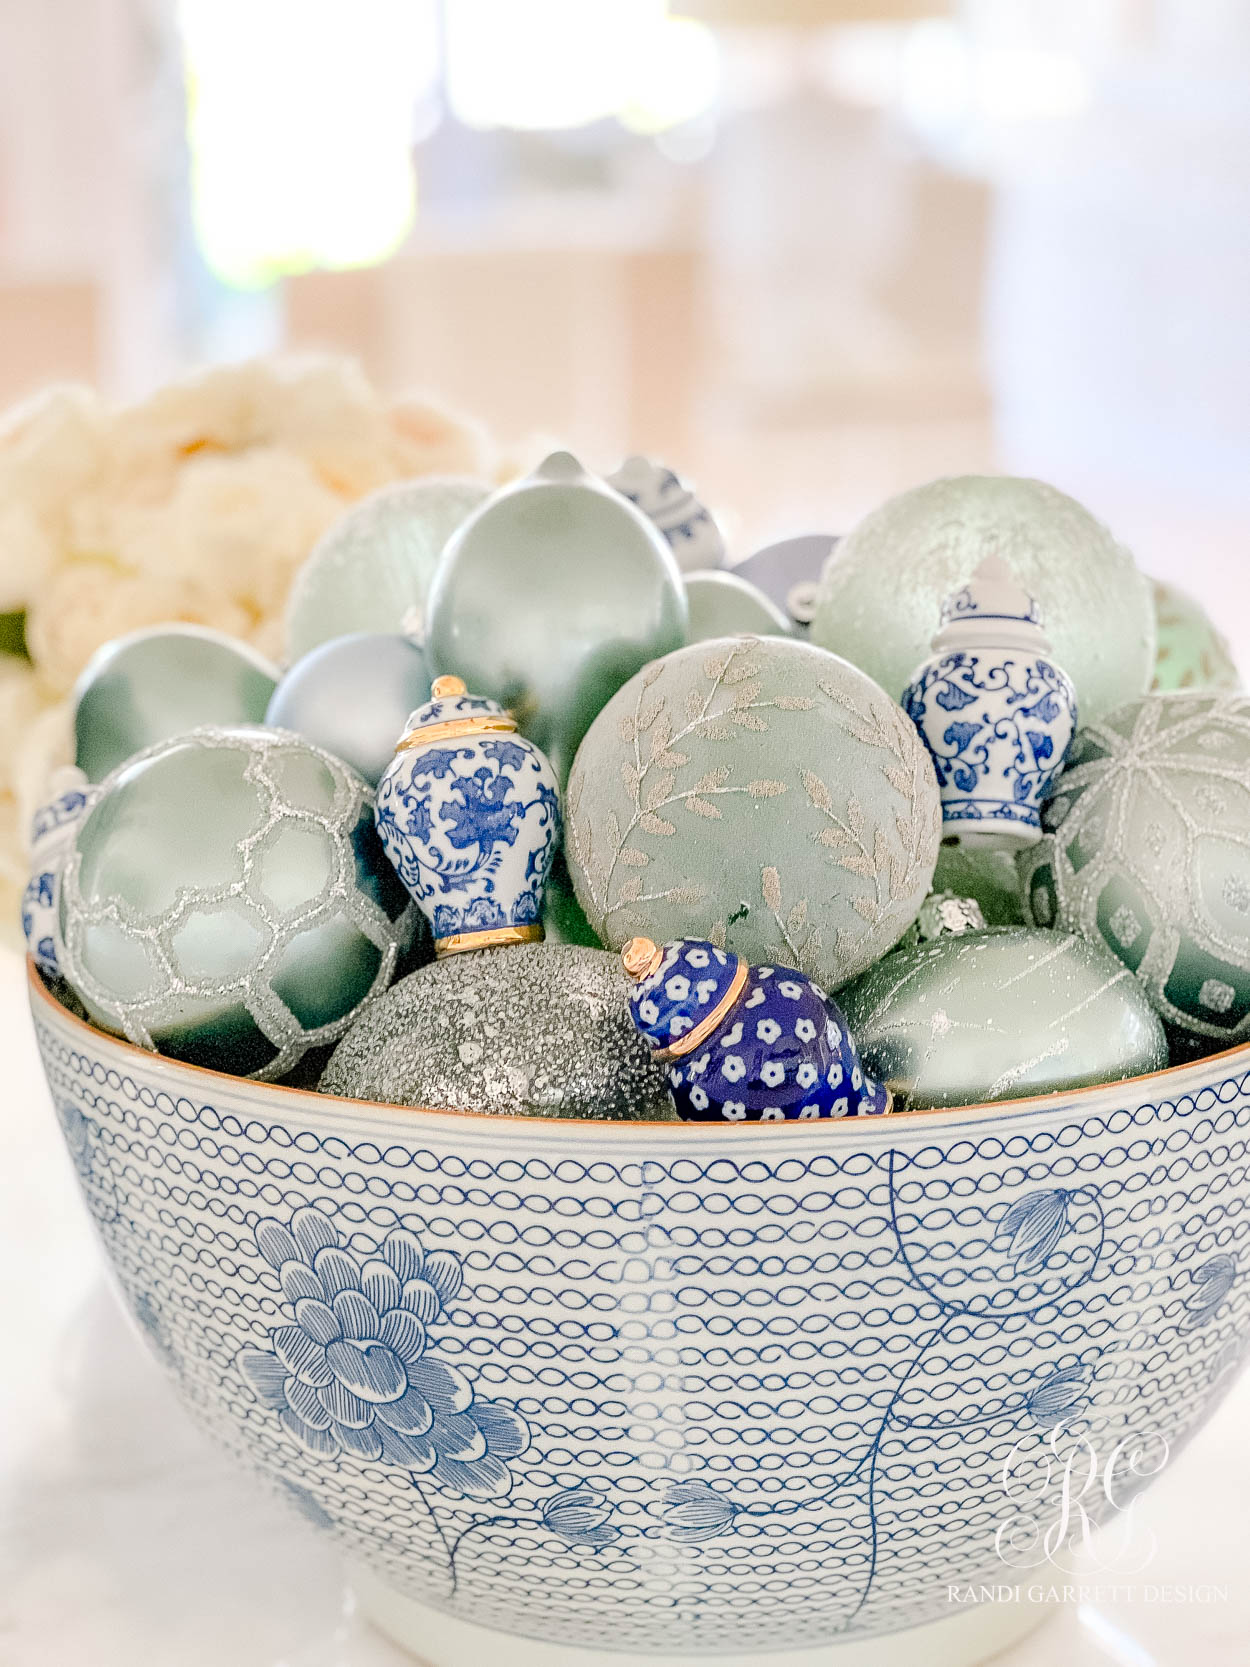 blue white ornament arrangement with ginger jars